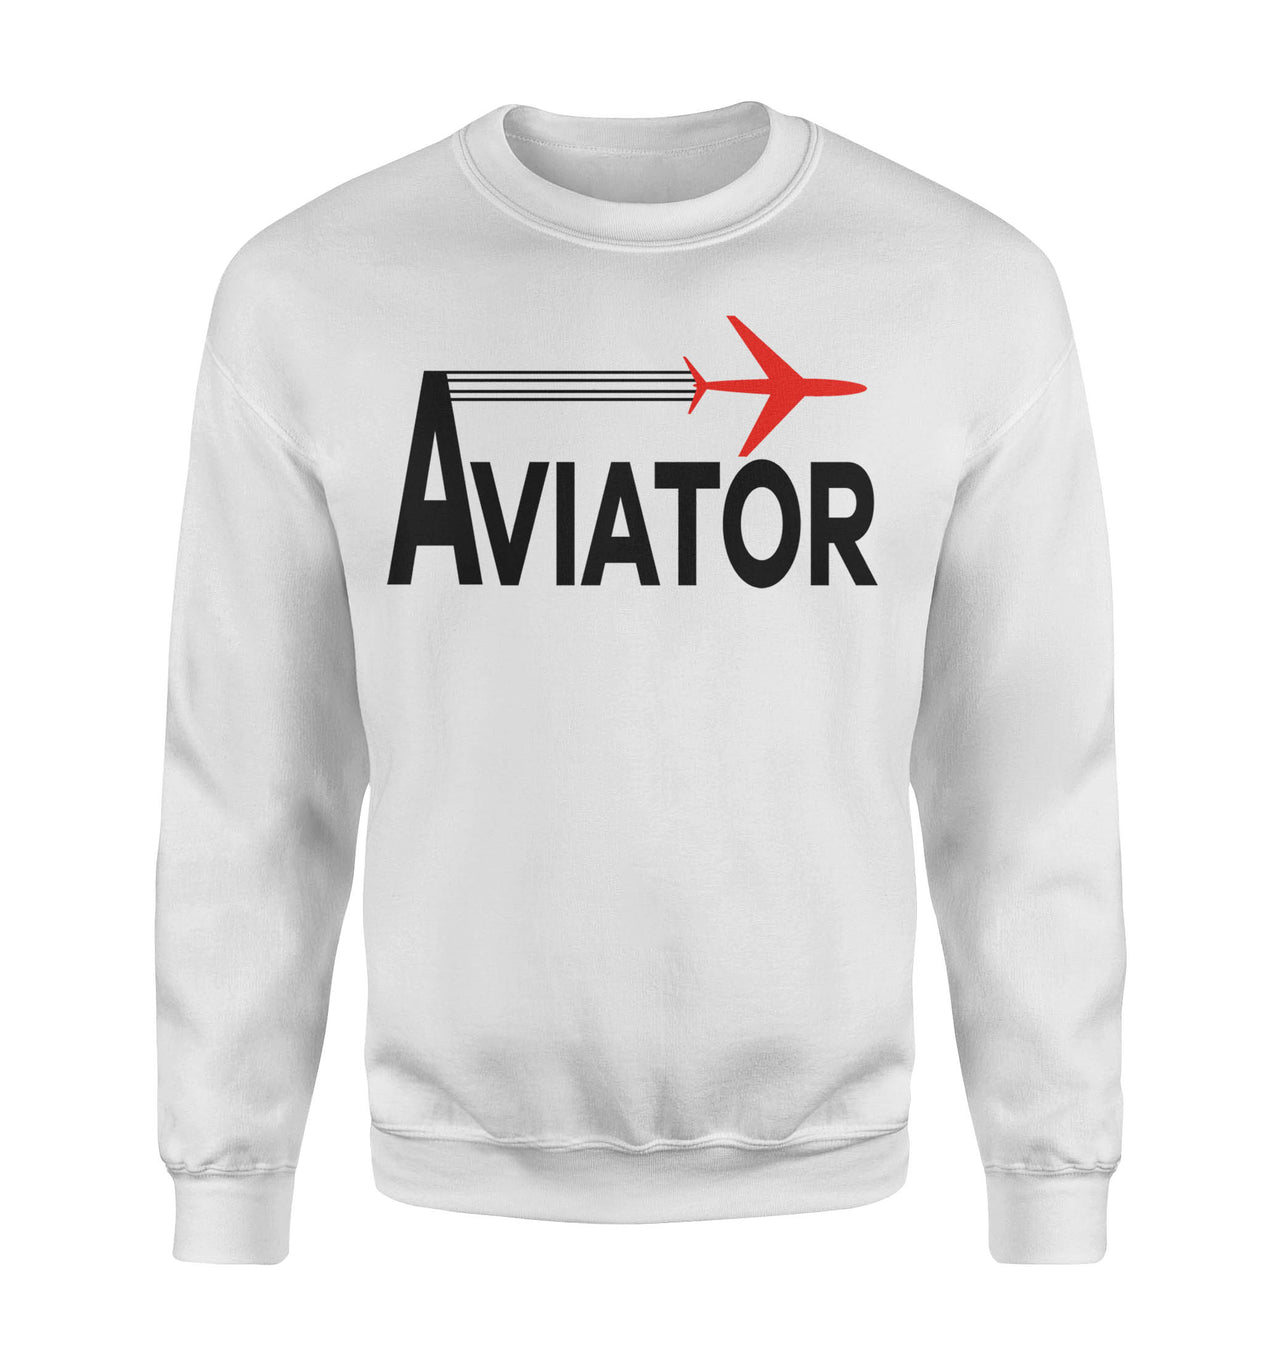 Aviator Designed Sweatshirts